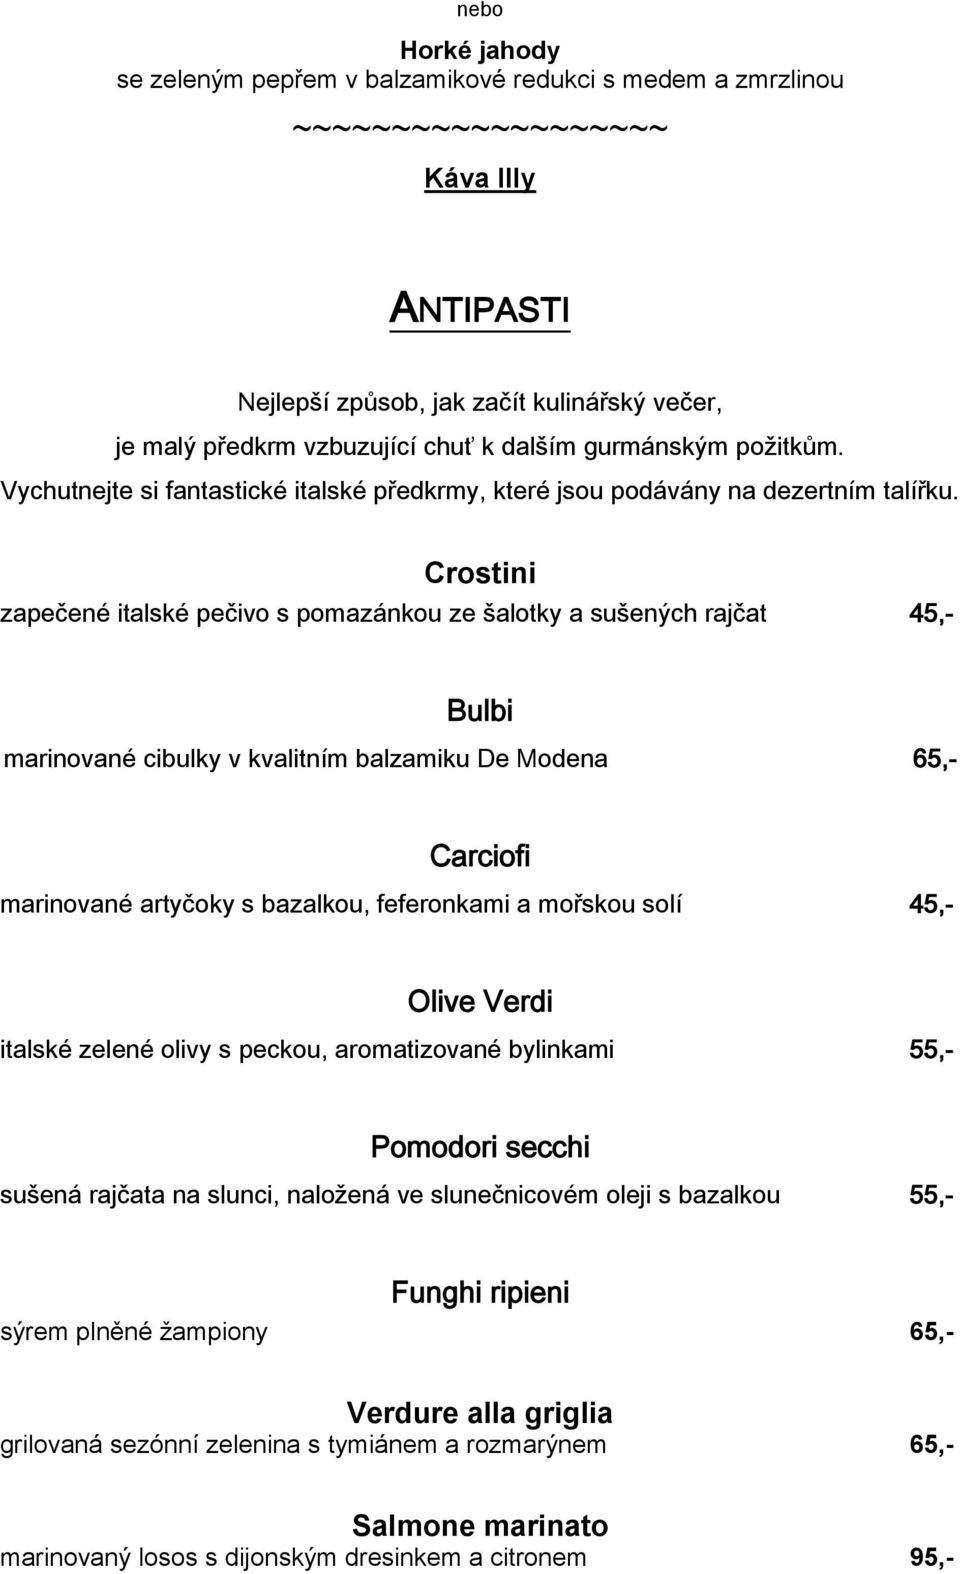 5-ti chodové degustační menu 945,- - PDF Free Download